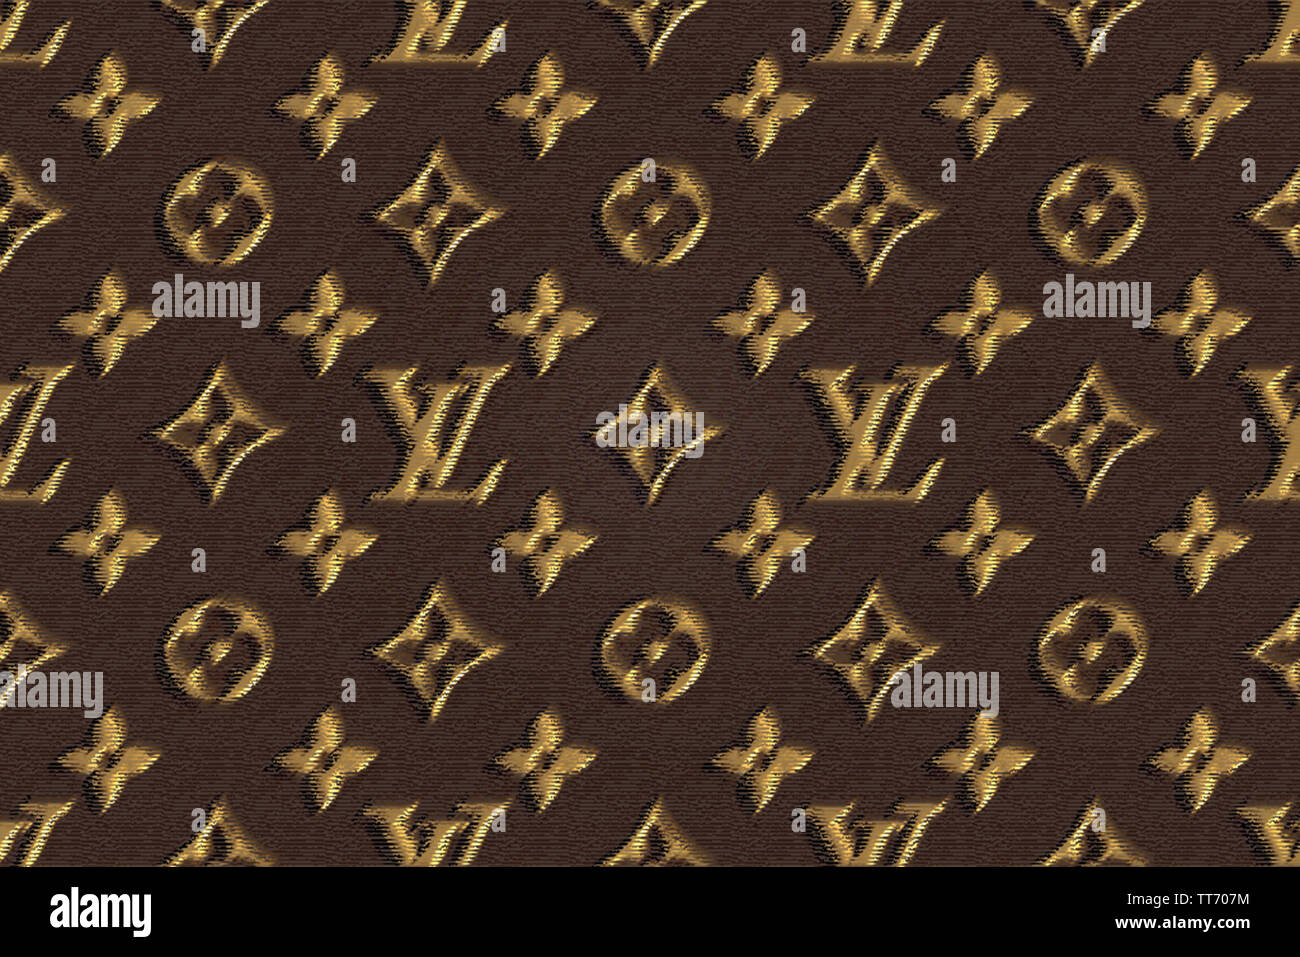 Louis Vuitton wallpaper background iconic luxury brand Stock Photo - Alamy